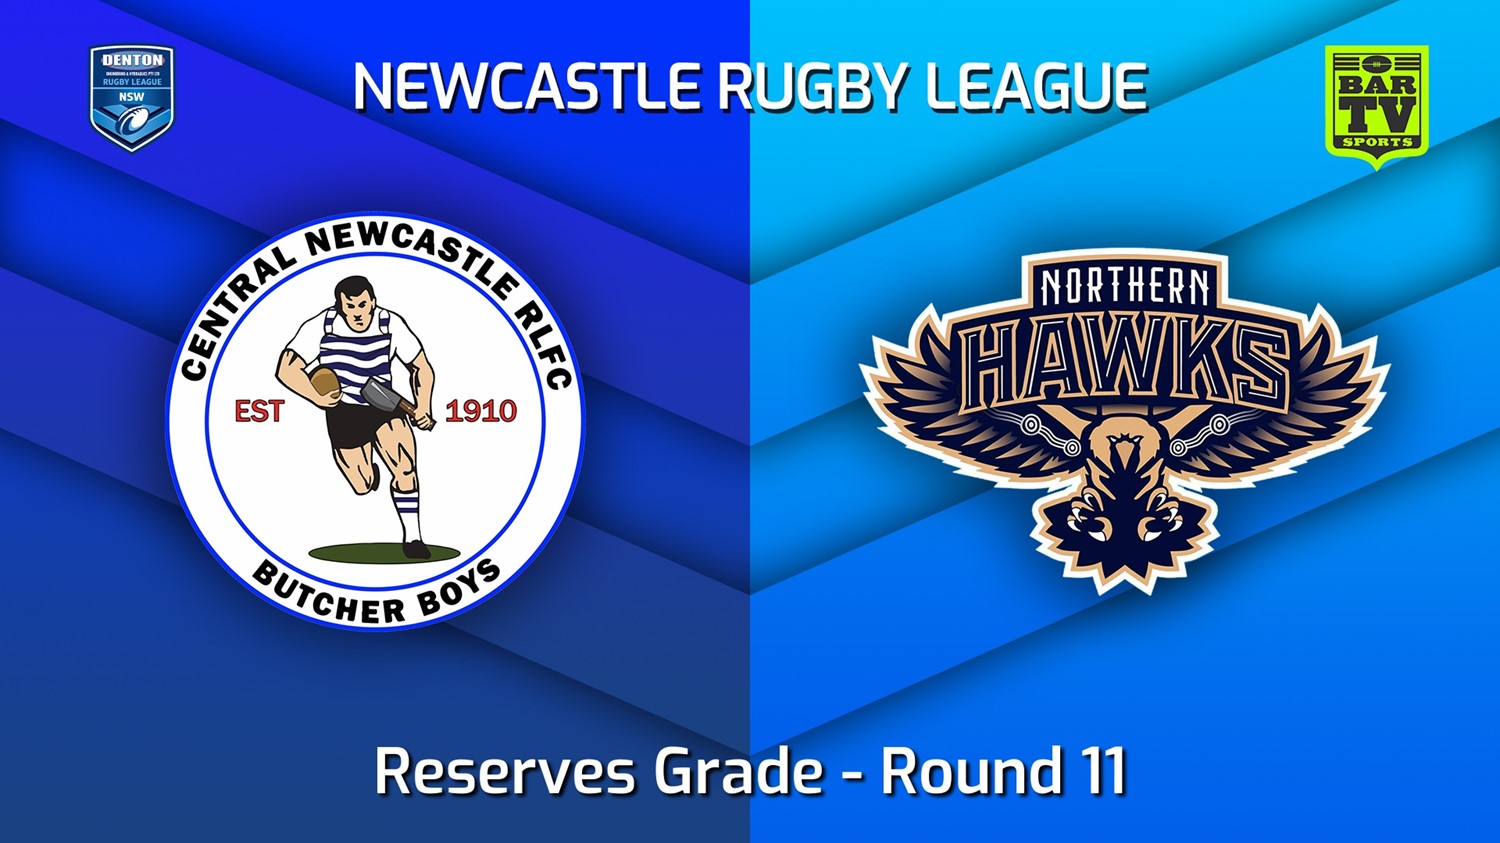 220612-Newcastle Round 11 - Reserves Grade - Central Newcastle v Northern Hawks Slate Image